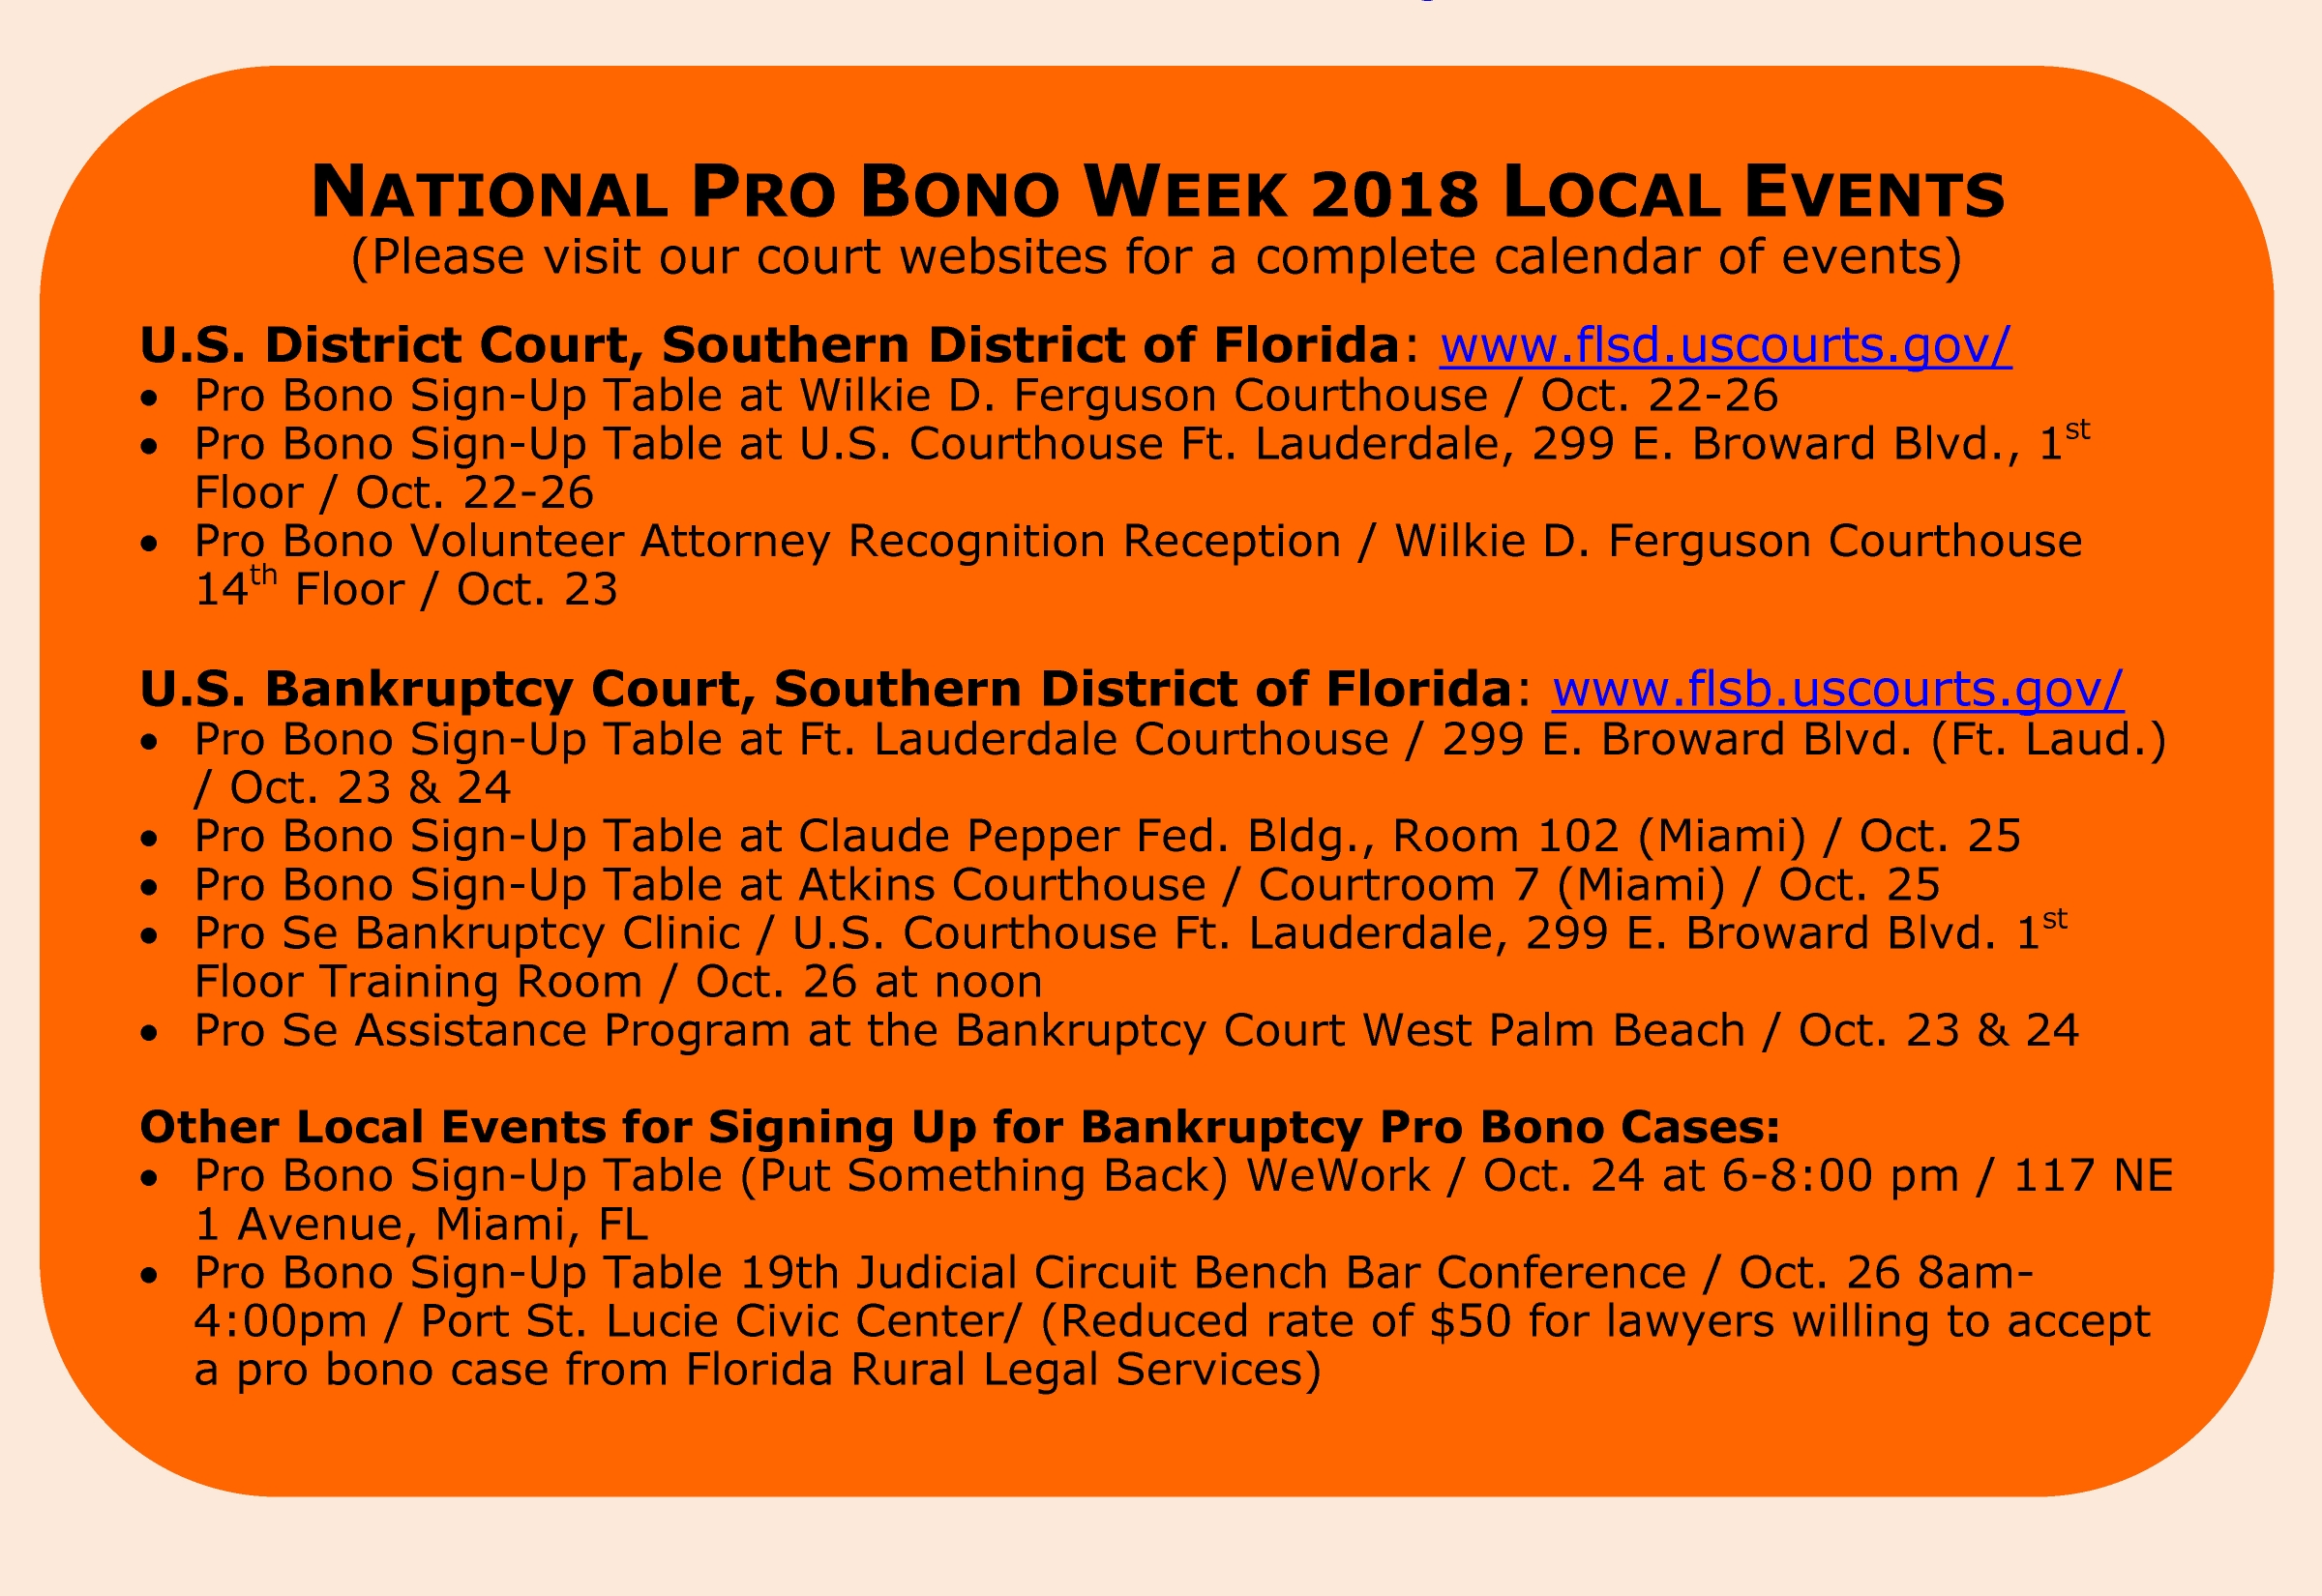 Pro Bono Week Events